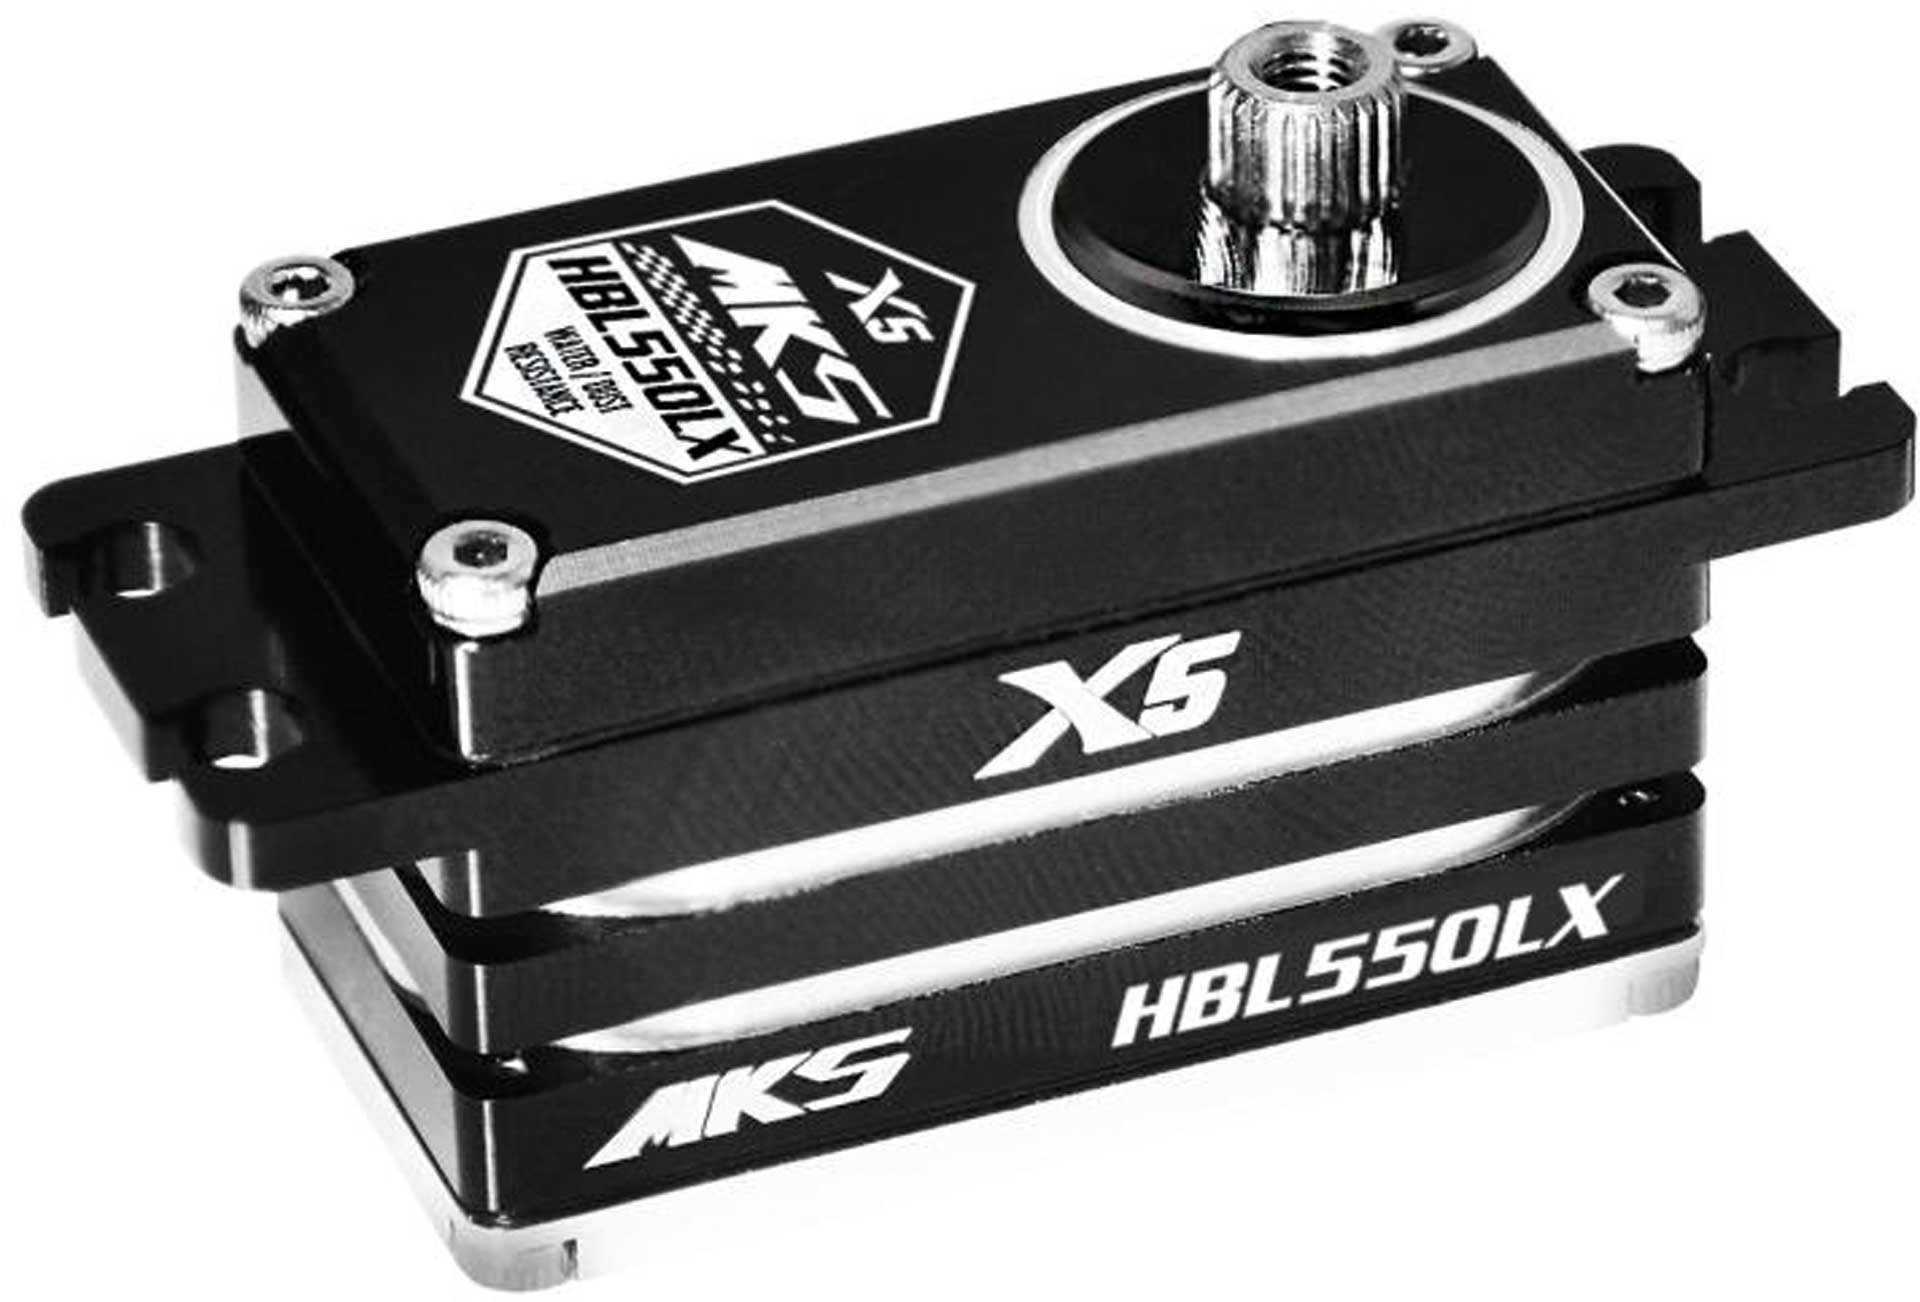 MKS HBL550LX HV Digital Servo brushless X5 Serie